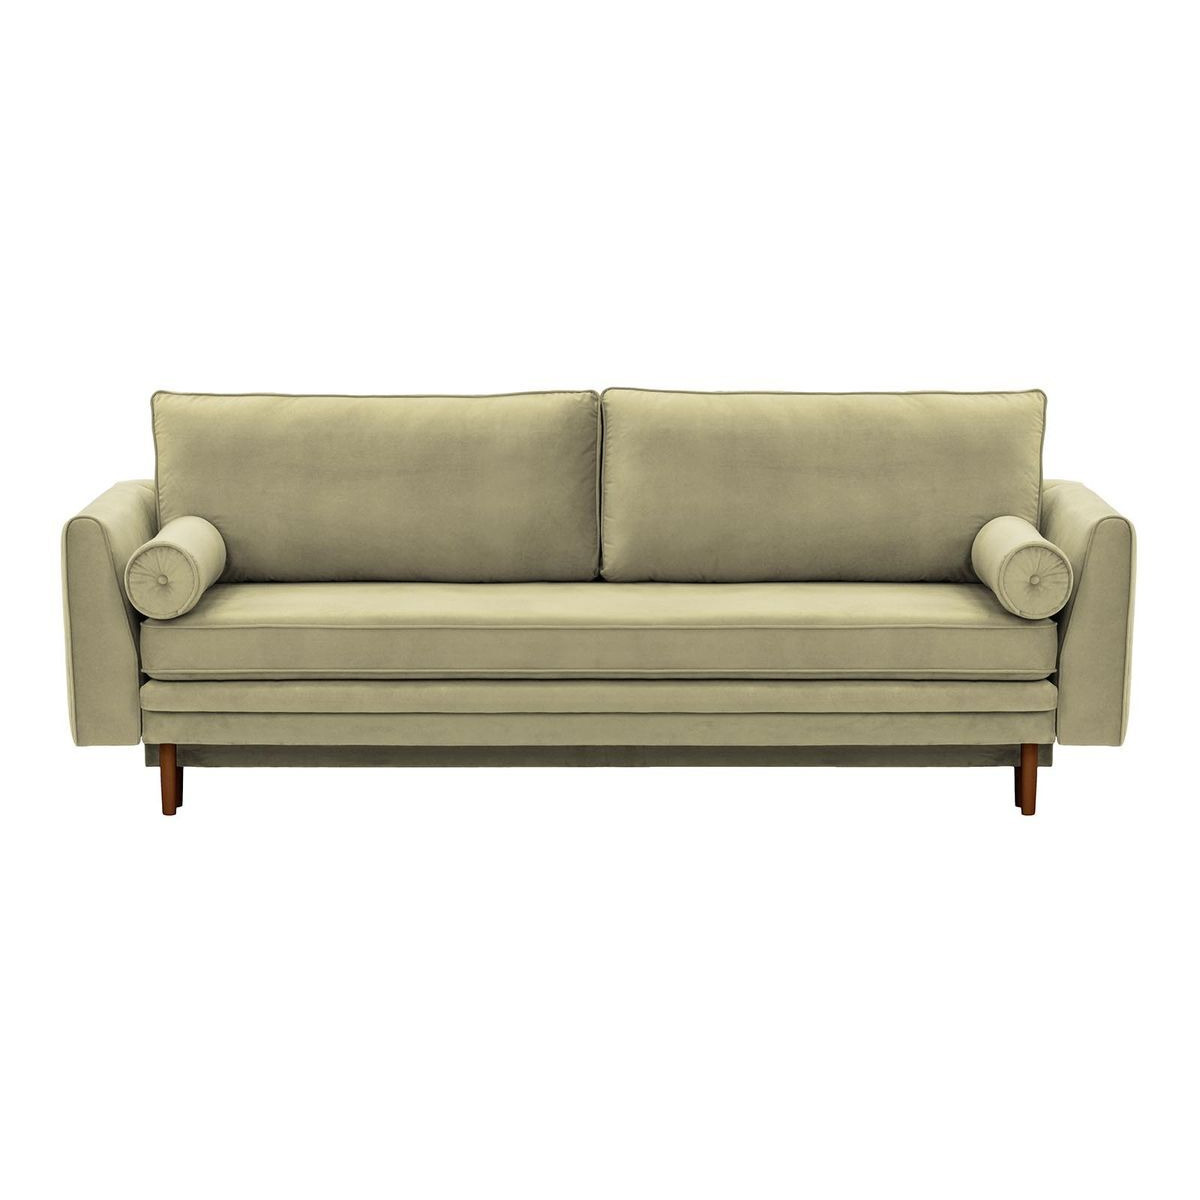 Boris Sofa Bed with Storage, beige, Leg colour: dark oak - image 1